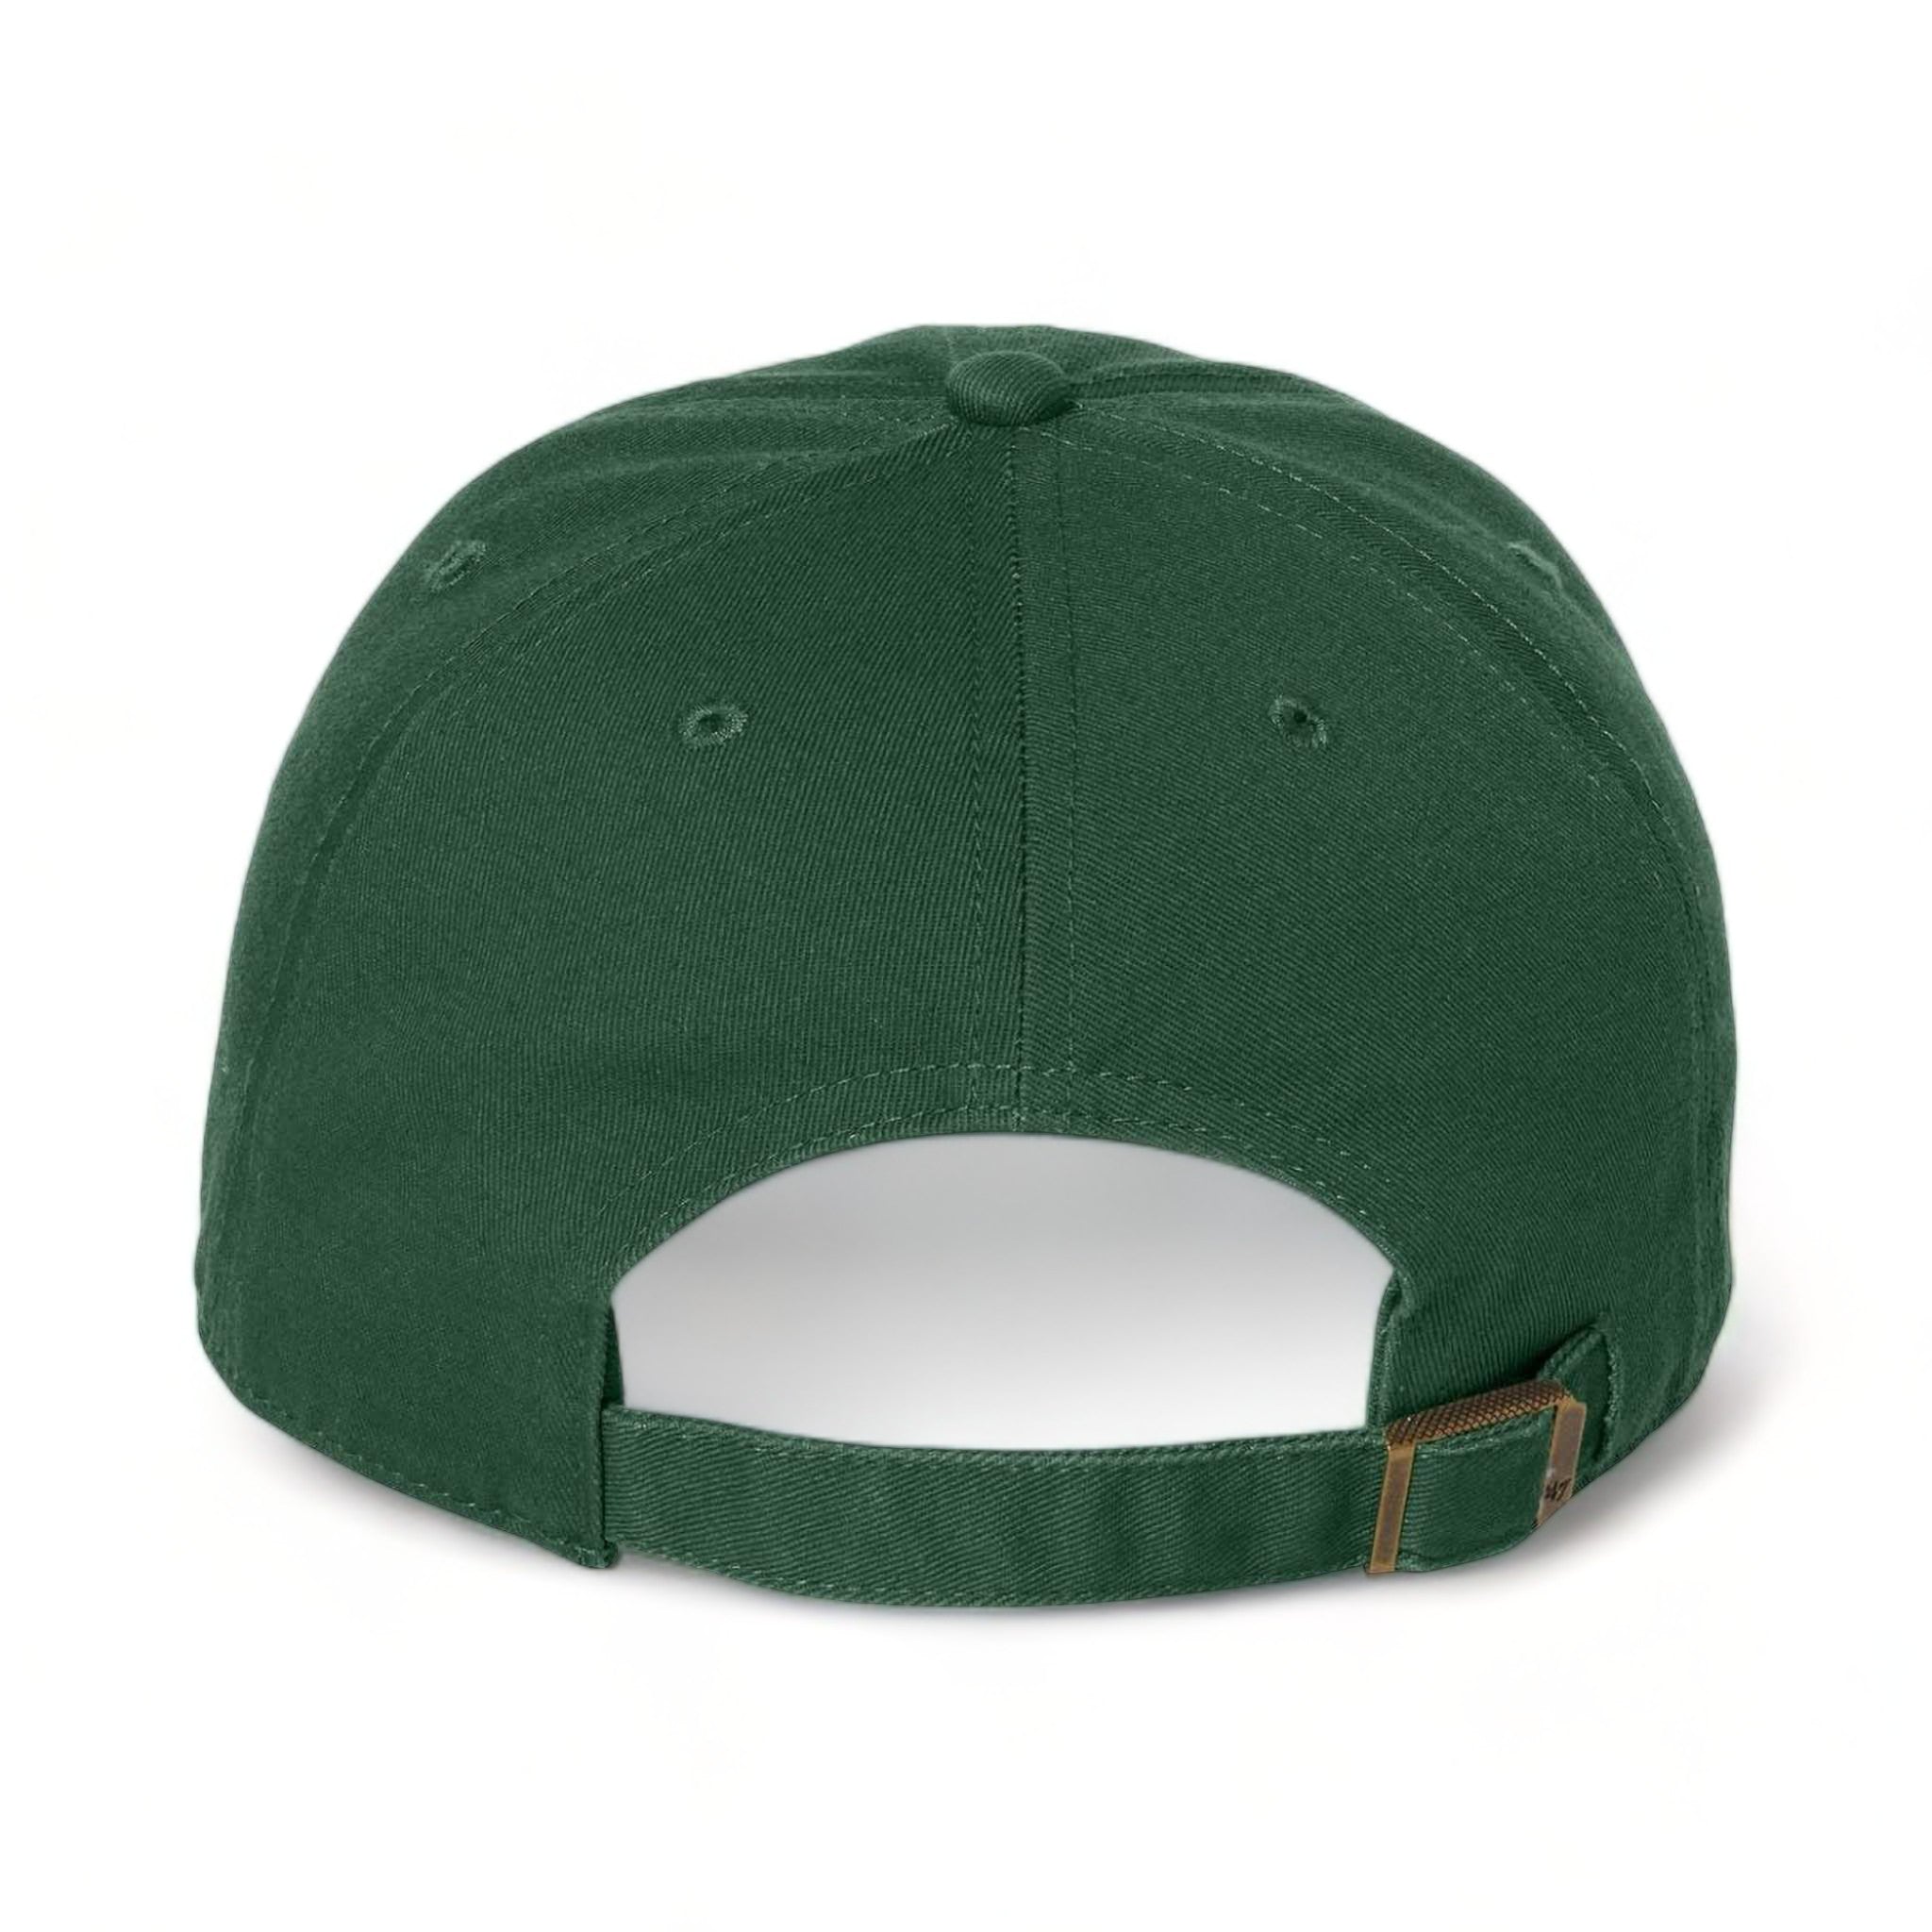 Back view of 47 Brand 4700 custom hat in dark green